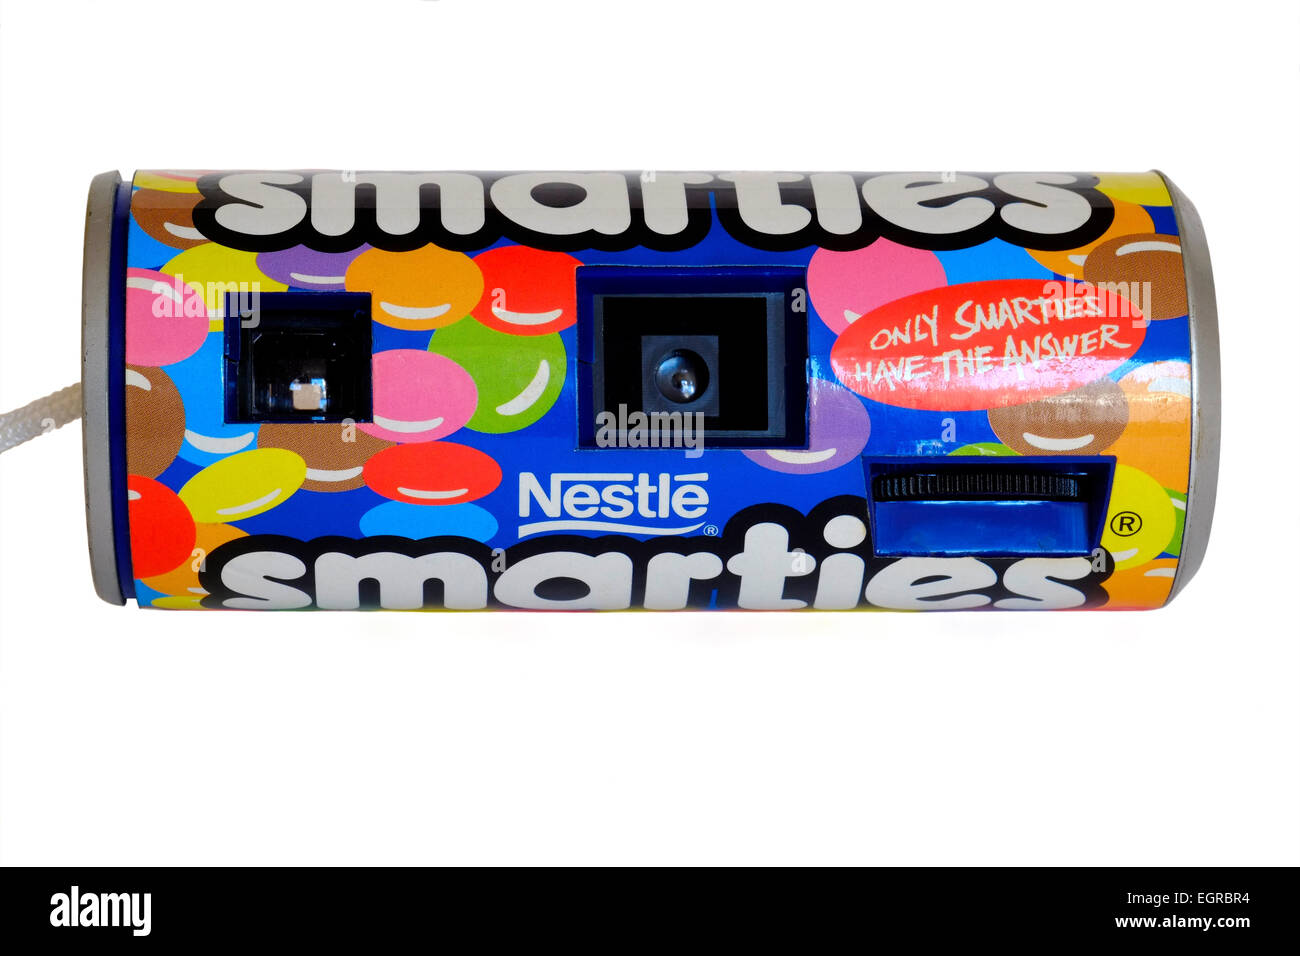 nestle smarties promotional 110 cartridge novelty film camera Stock Photo